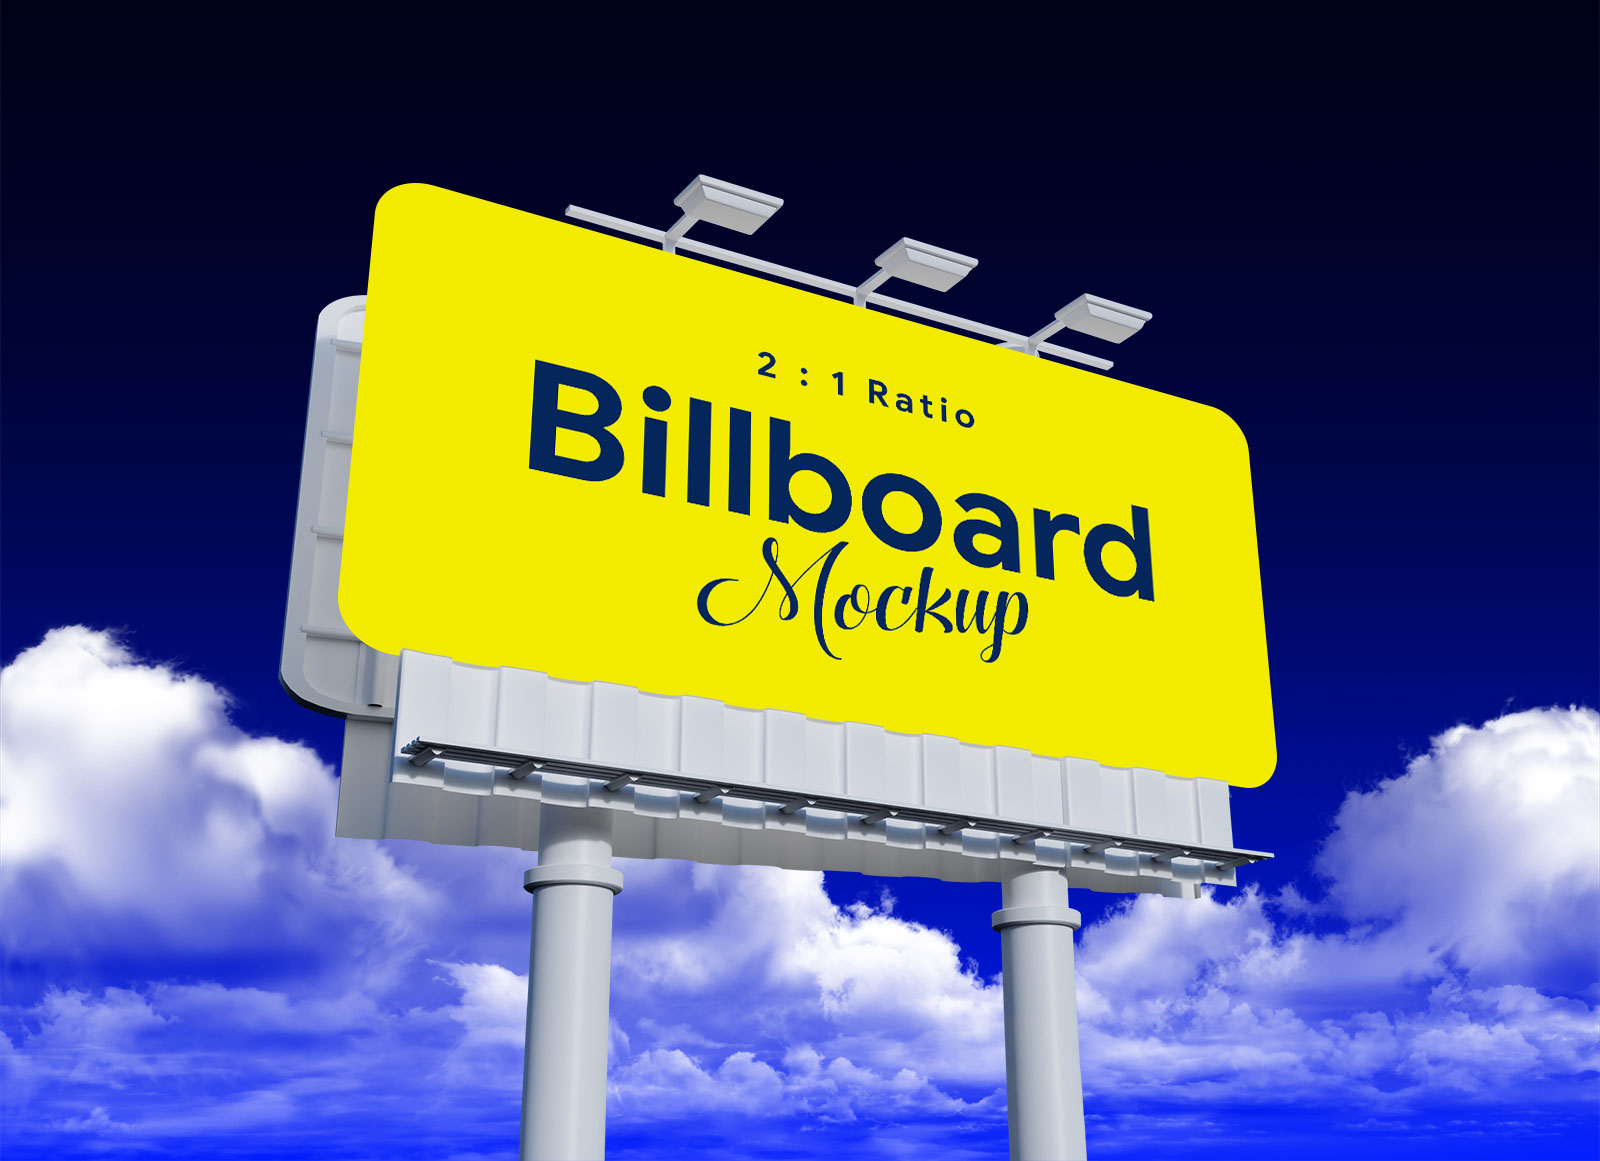 Free-Rounded-Corners-Billboard-Hoarding-Mockup-PSD